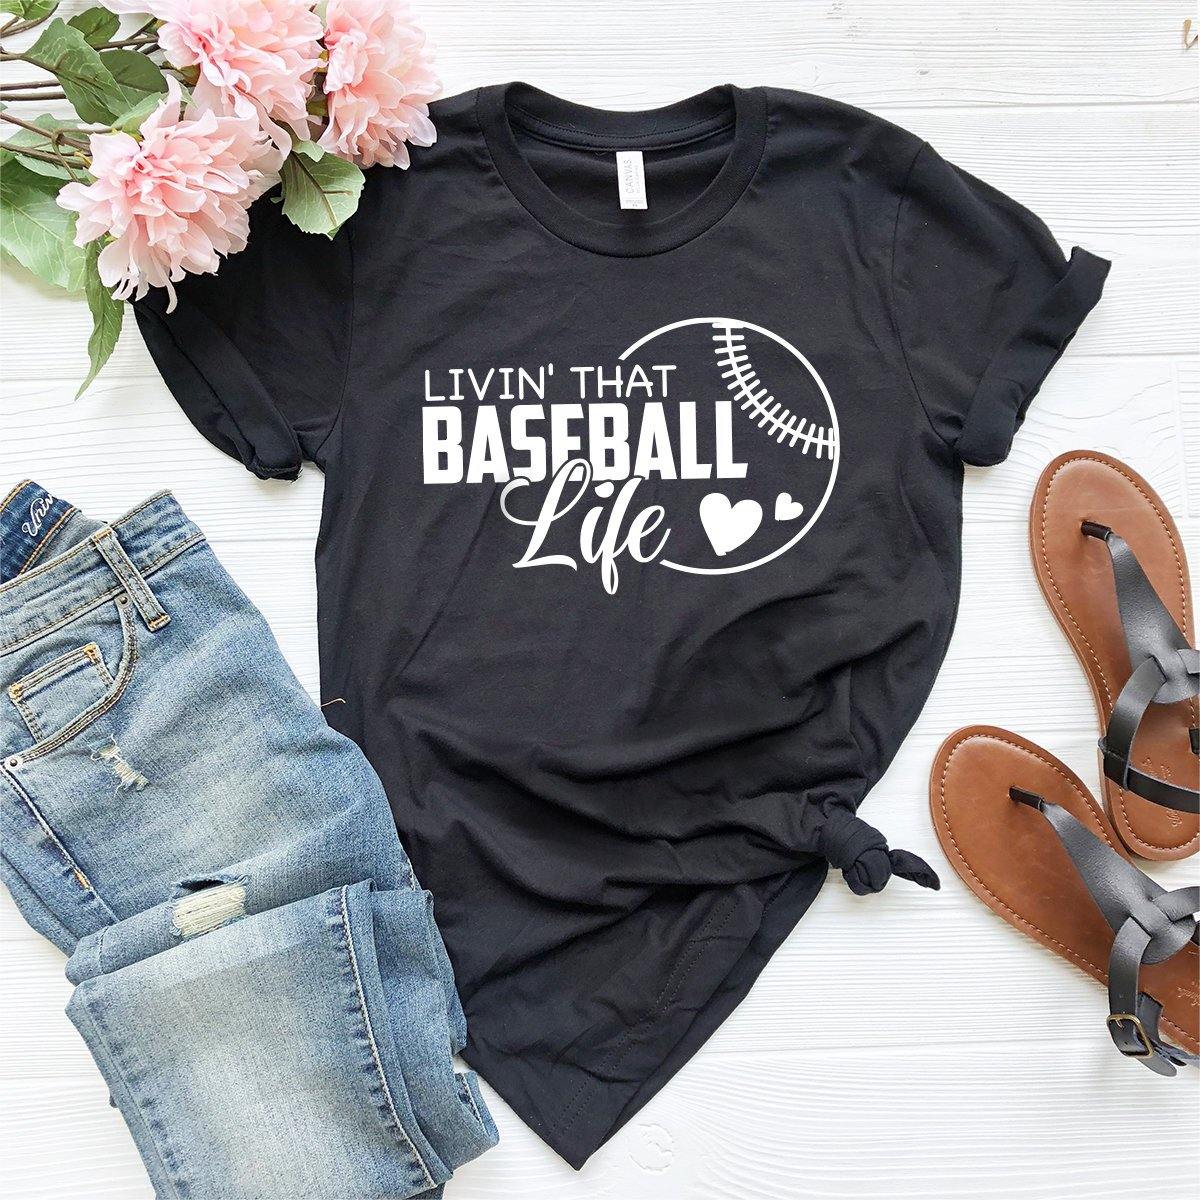 Living That Baseball Life Shirt, Baseball T-Shirt, Baseball Fan Shirt, Baseball Lover Game Shirt, Softball Shirt, Baseball Gift - Fastdeliverytees.com